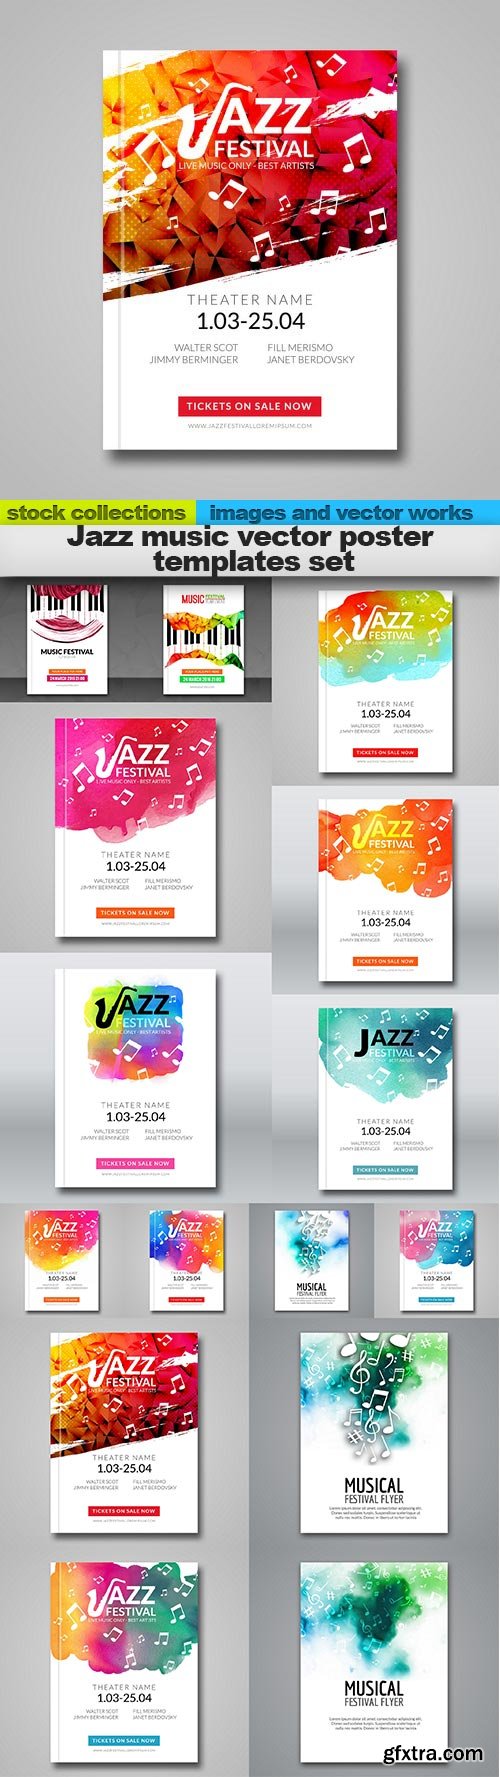 Jazz music vector poster templates set, 15 x EPS